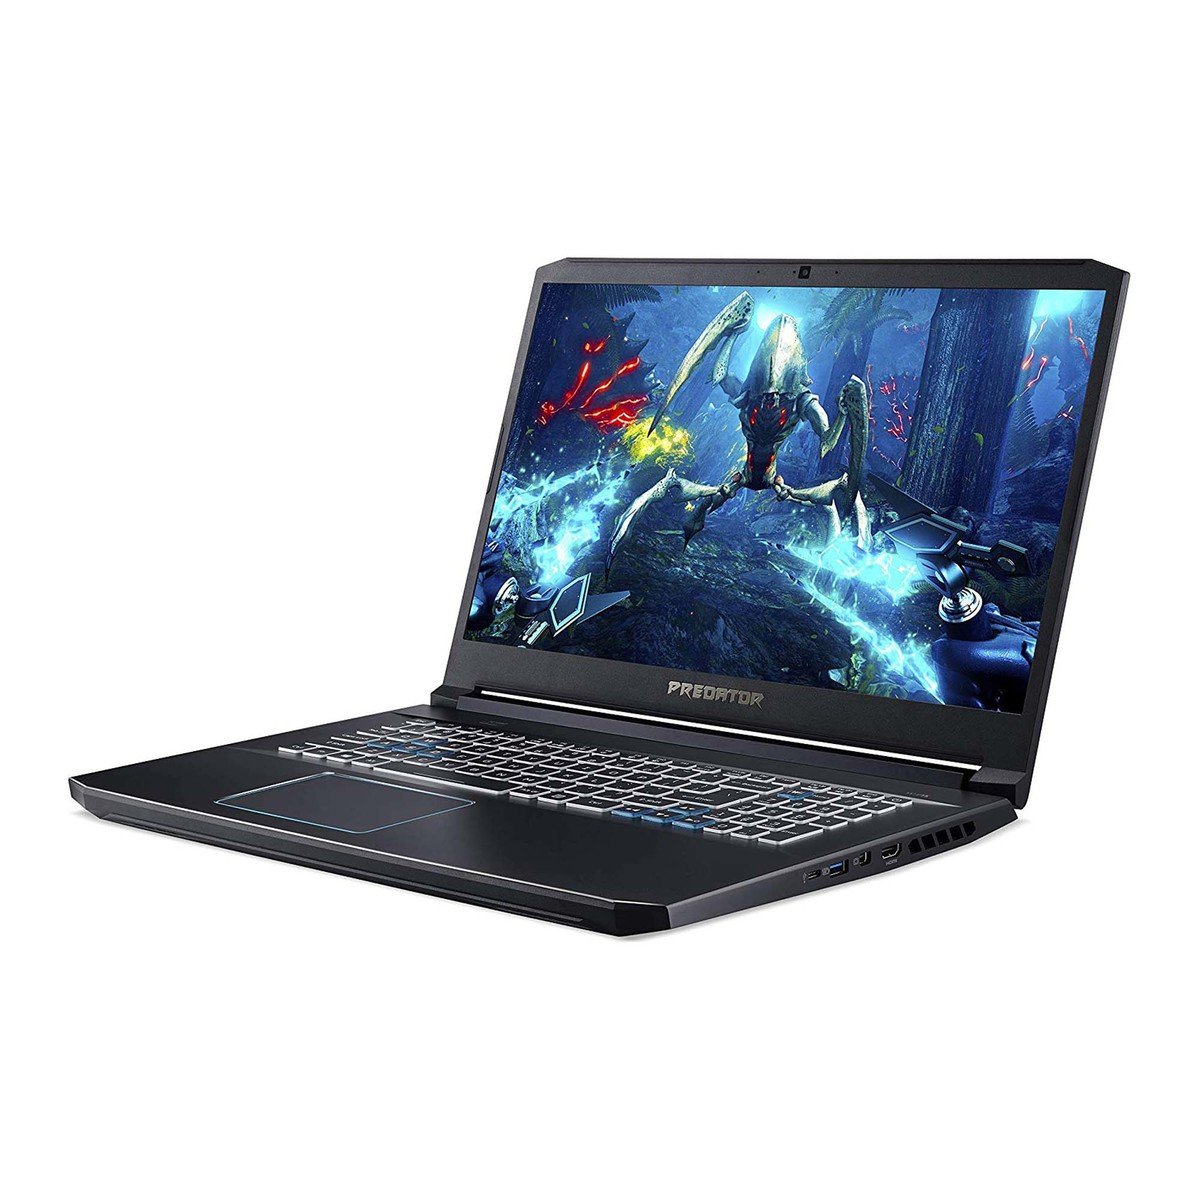 Acer Predator Helios 300-PH317-53-71W3 Gaming Laptop Laptop-Intel Core i7-9750H/24GB DDR4/1TB SSD/6GB VRAM NVIDIA GeForce GTX 1660Ti/17.3" FHD IPS 144Hz slim bezel LCD/Win 10 Home/Black